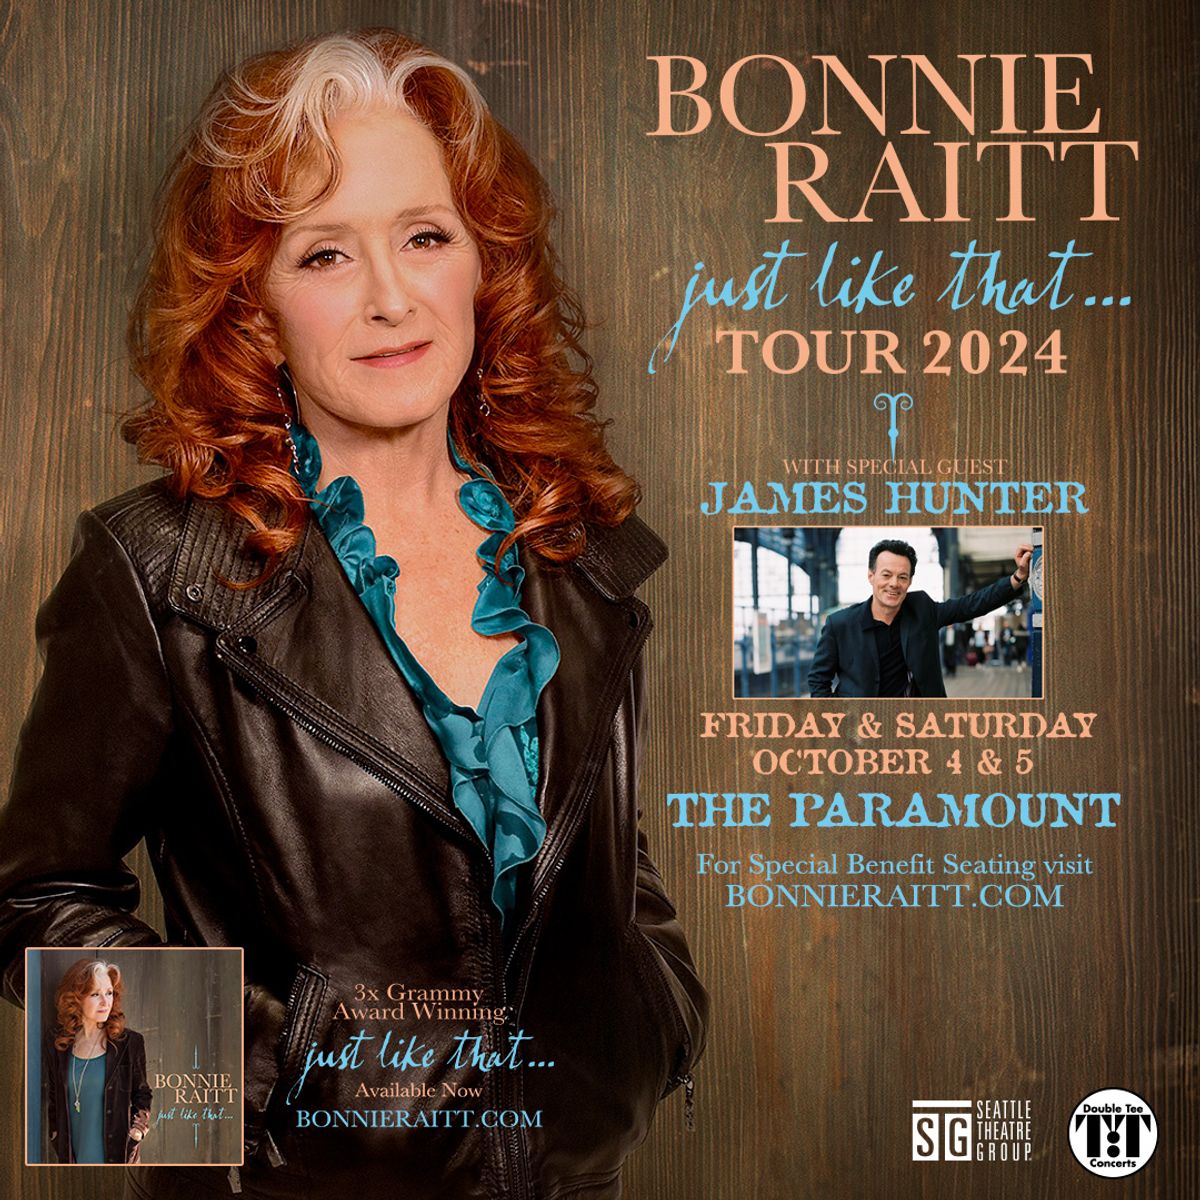 Bonnie Raitt Just Like That...Tour 2024 at Paramount Theatre in